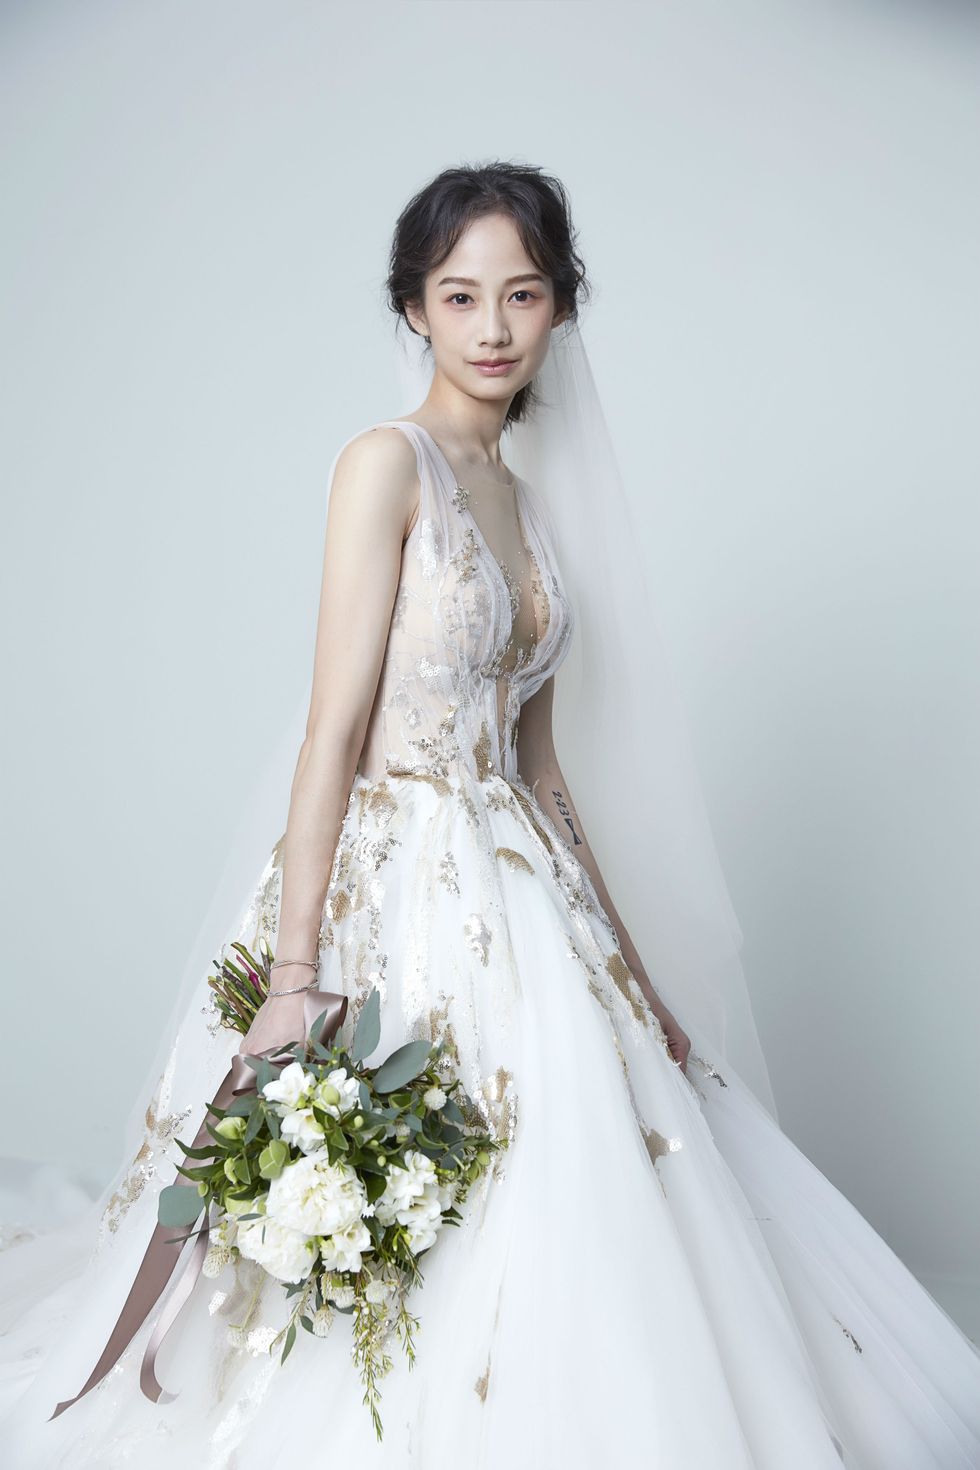 Gown, Bride, Wedding dress, Dress, Clothing, Photograph, Bridal clothing, White, Bridal party dress, Bridal accessory, 